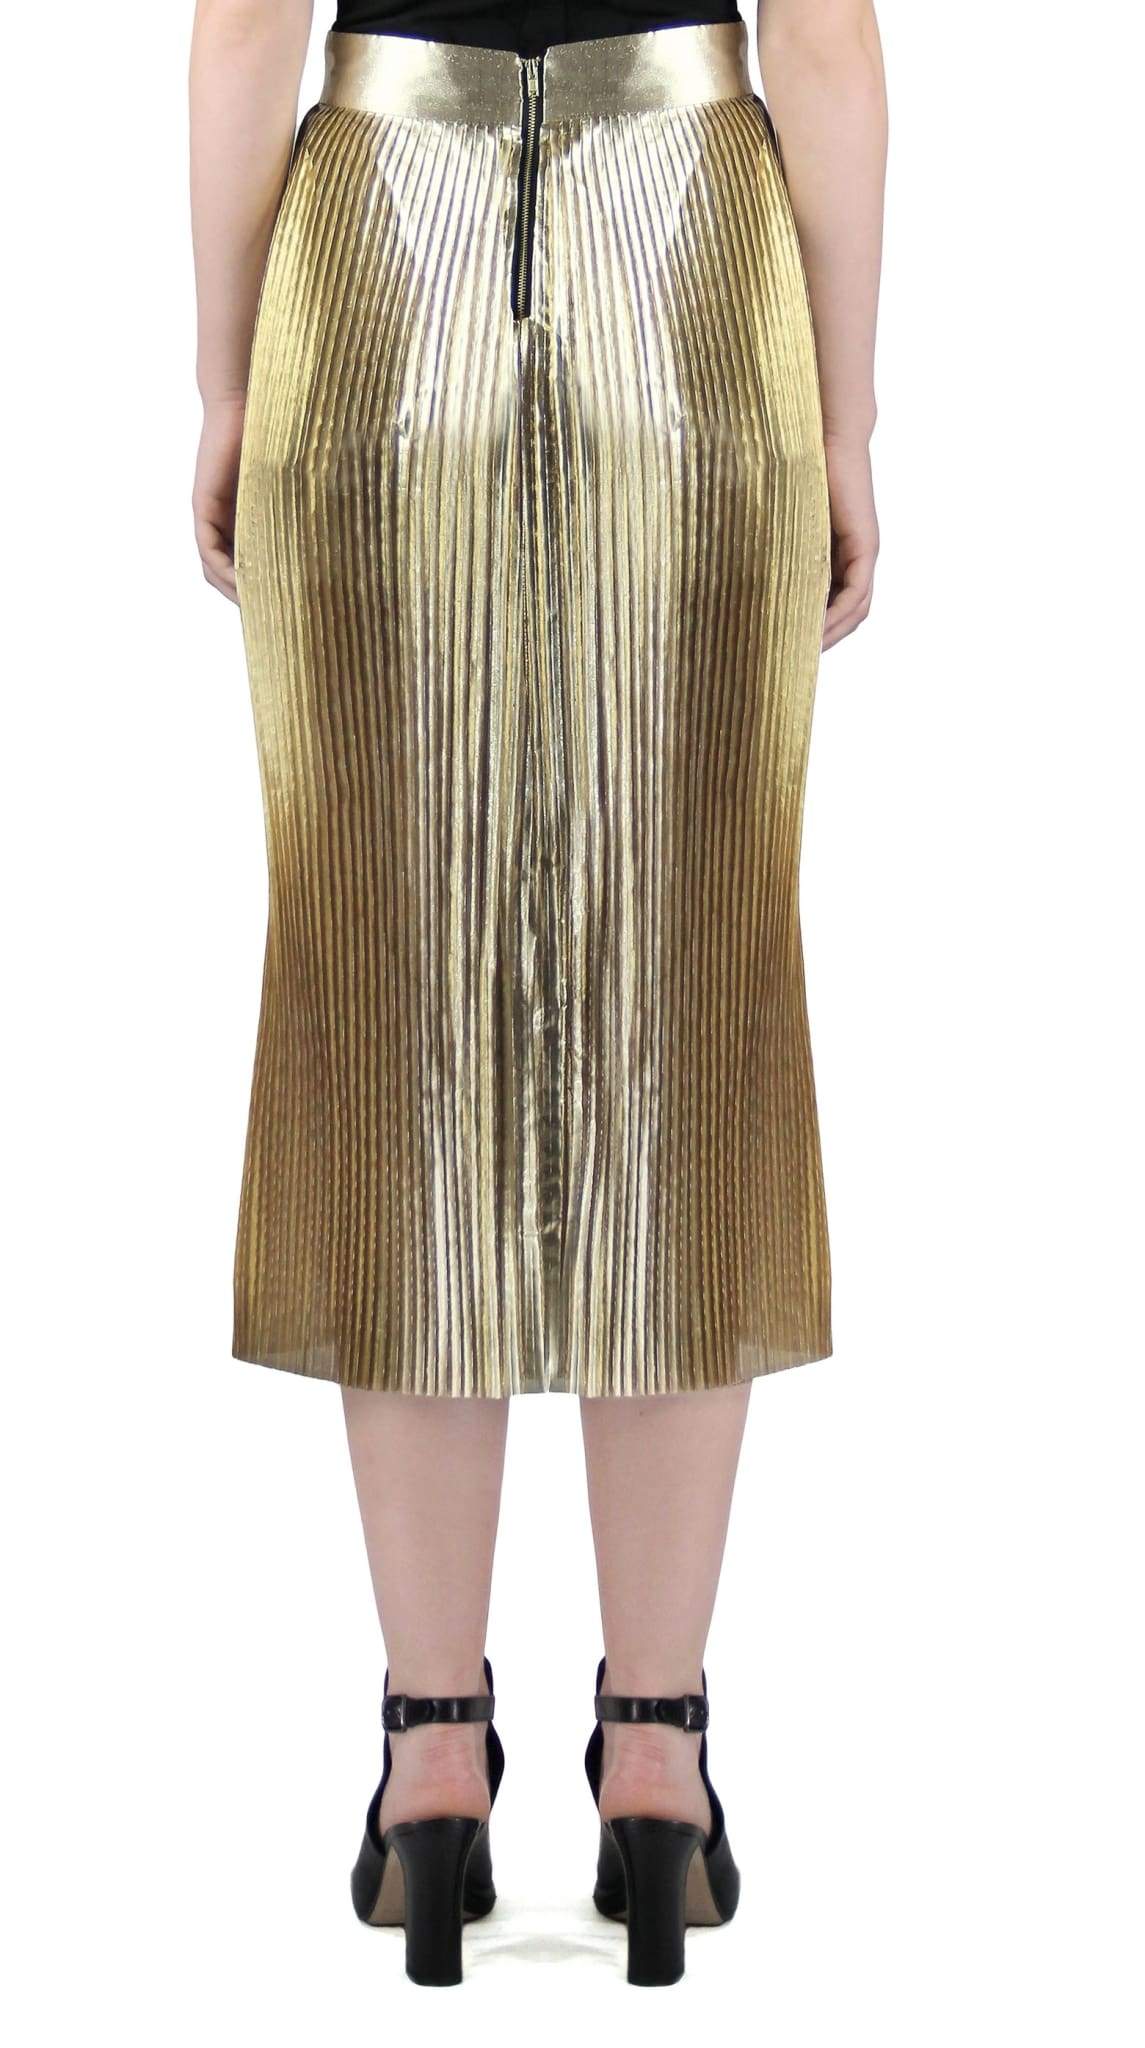 Gold Column Skirt by Chanho Jang 